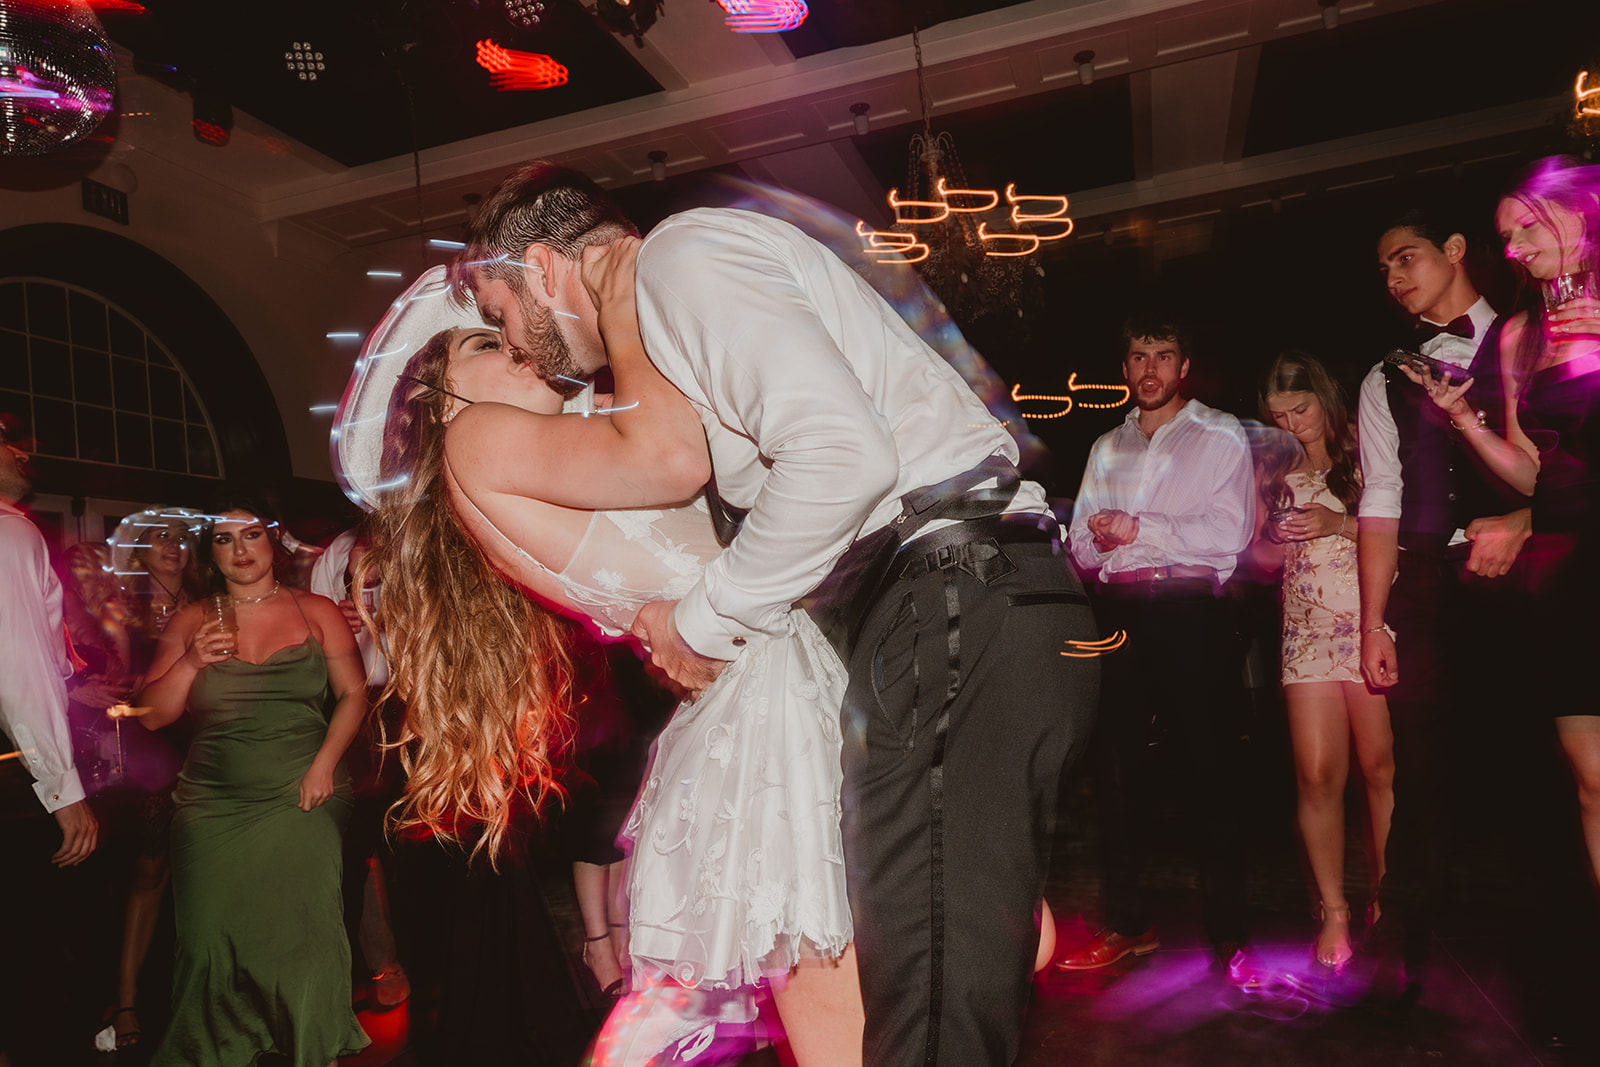 Surf Hotel Wedding Buena Vista, Colorado - Documentary Style Wedding Photography - Candid Dancing Photos